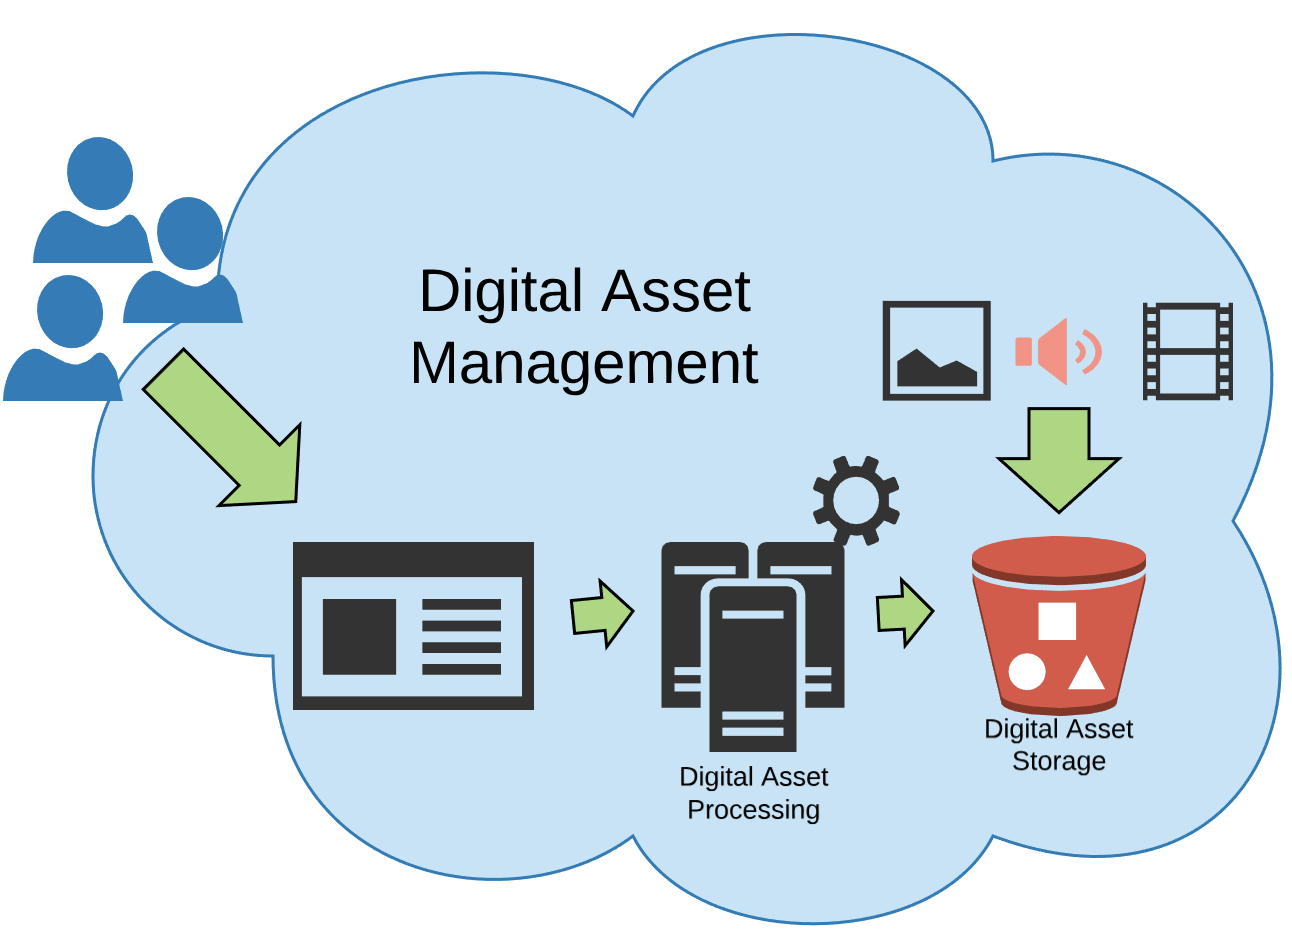 Digital Asset Management Market